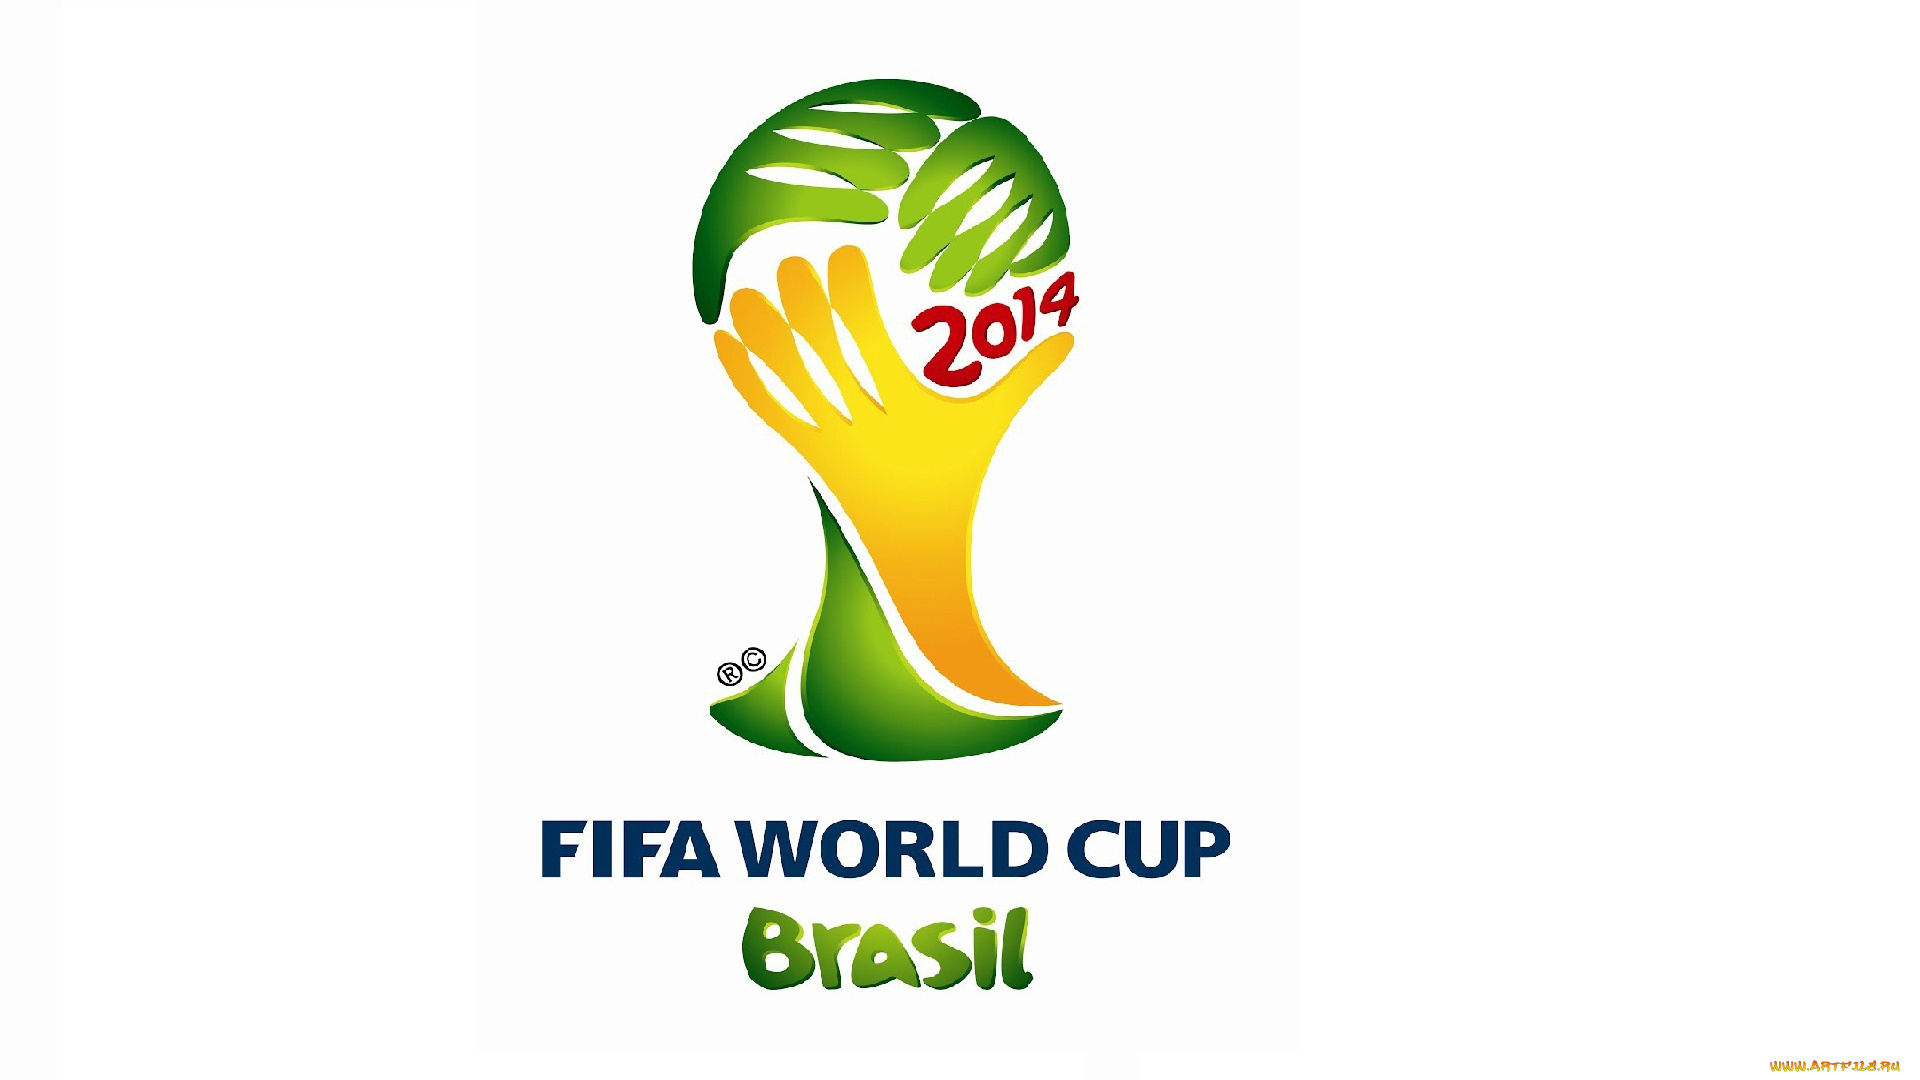 спорт, логотипы, турниров, чемпионат, бразилия, футбол, руки, надпись, эмблема, логотип